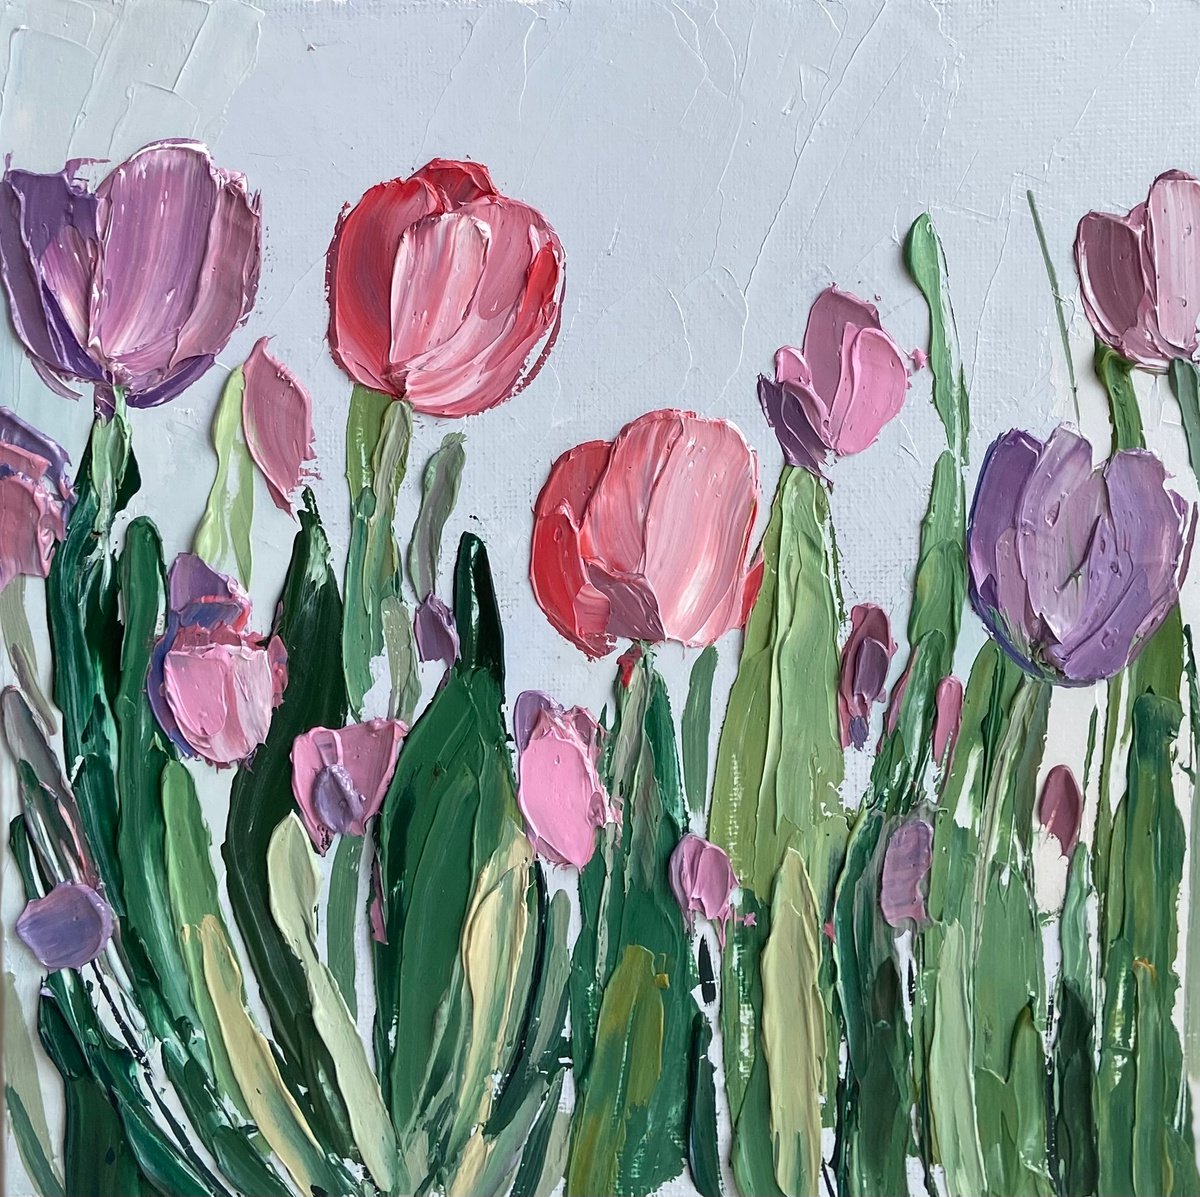 Abstract Tulips flowers painting 20x20cm mini art impasto oil by Leysan Khasanova